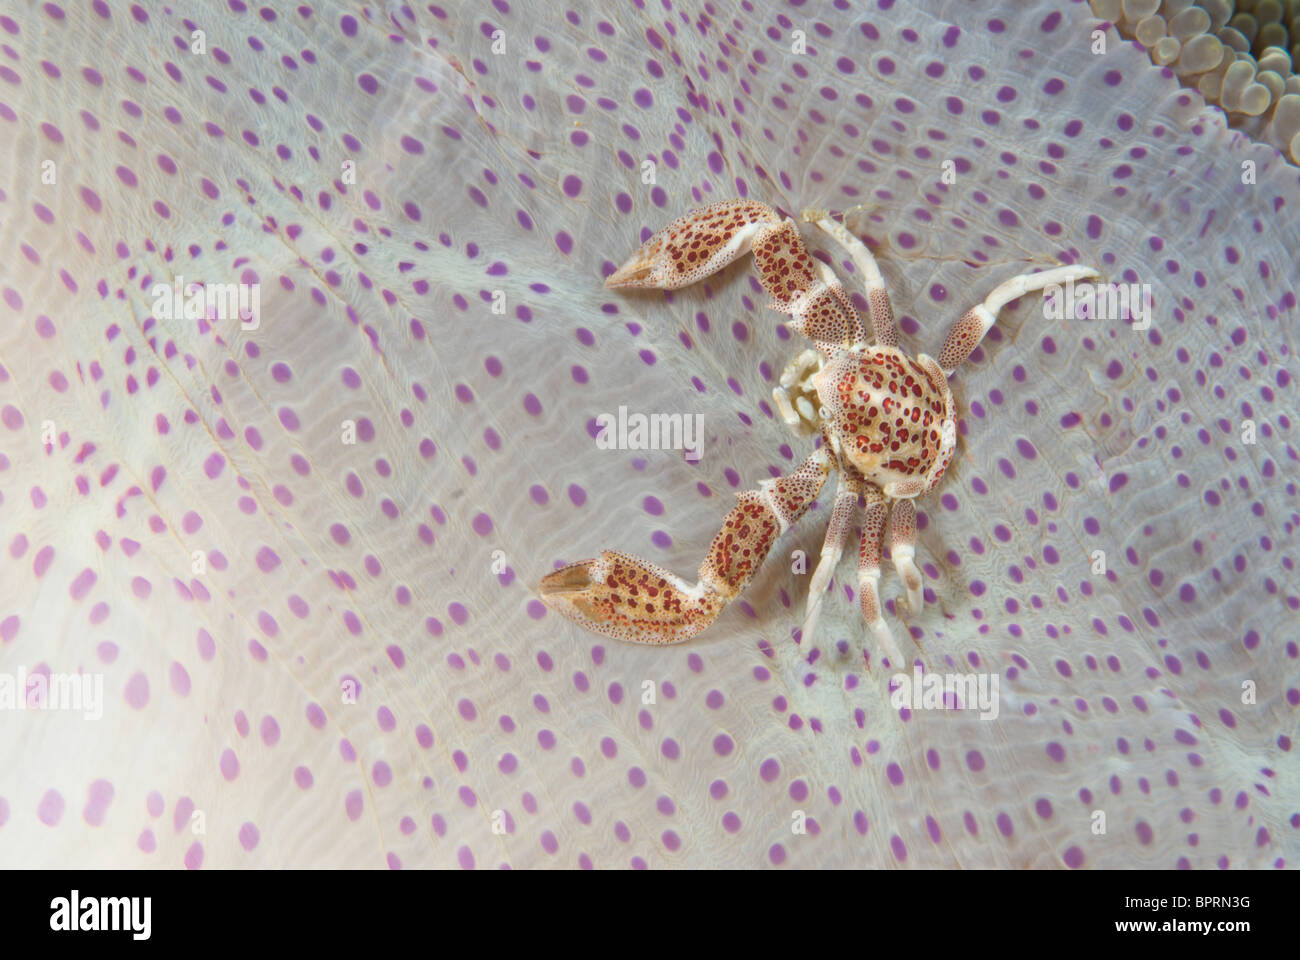 Porcelain anemone crab, Neopetrolisthes oshimai, Puetro Galera, Philippines, Pacific Ocean. Stock Photo